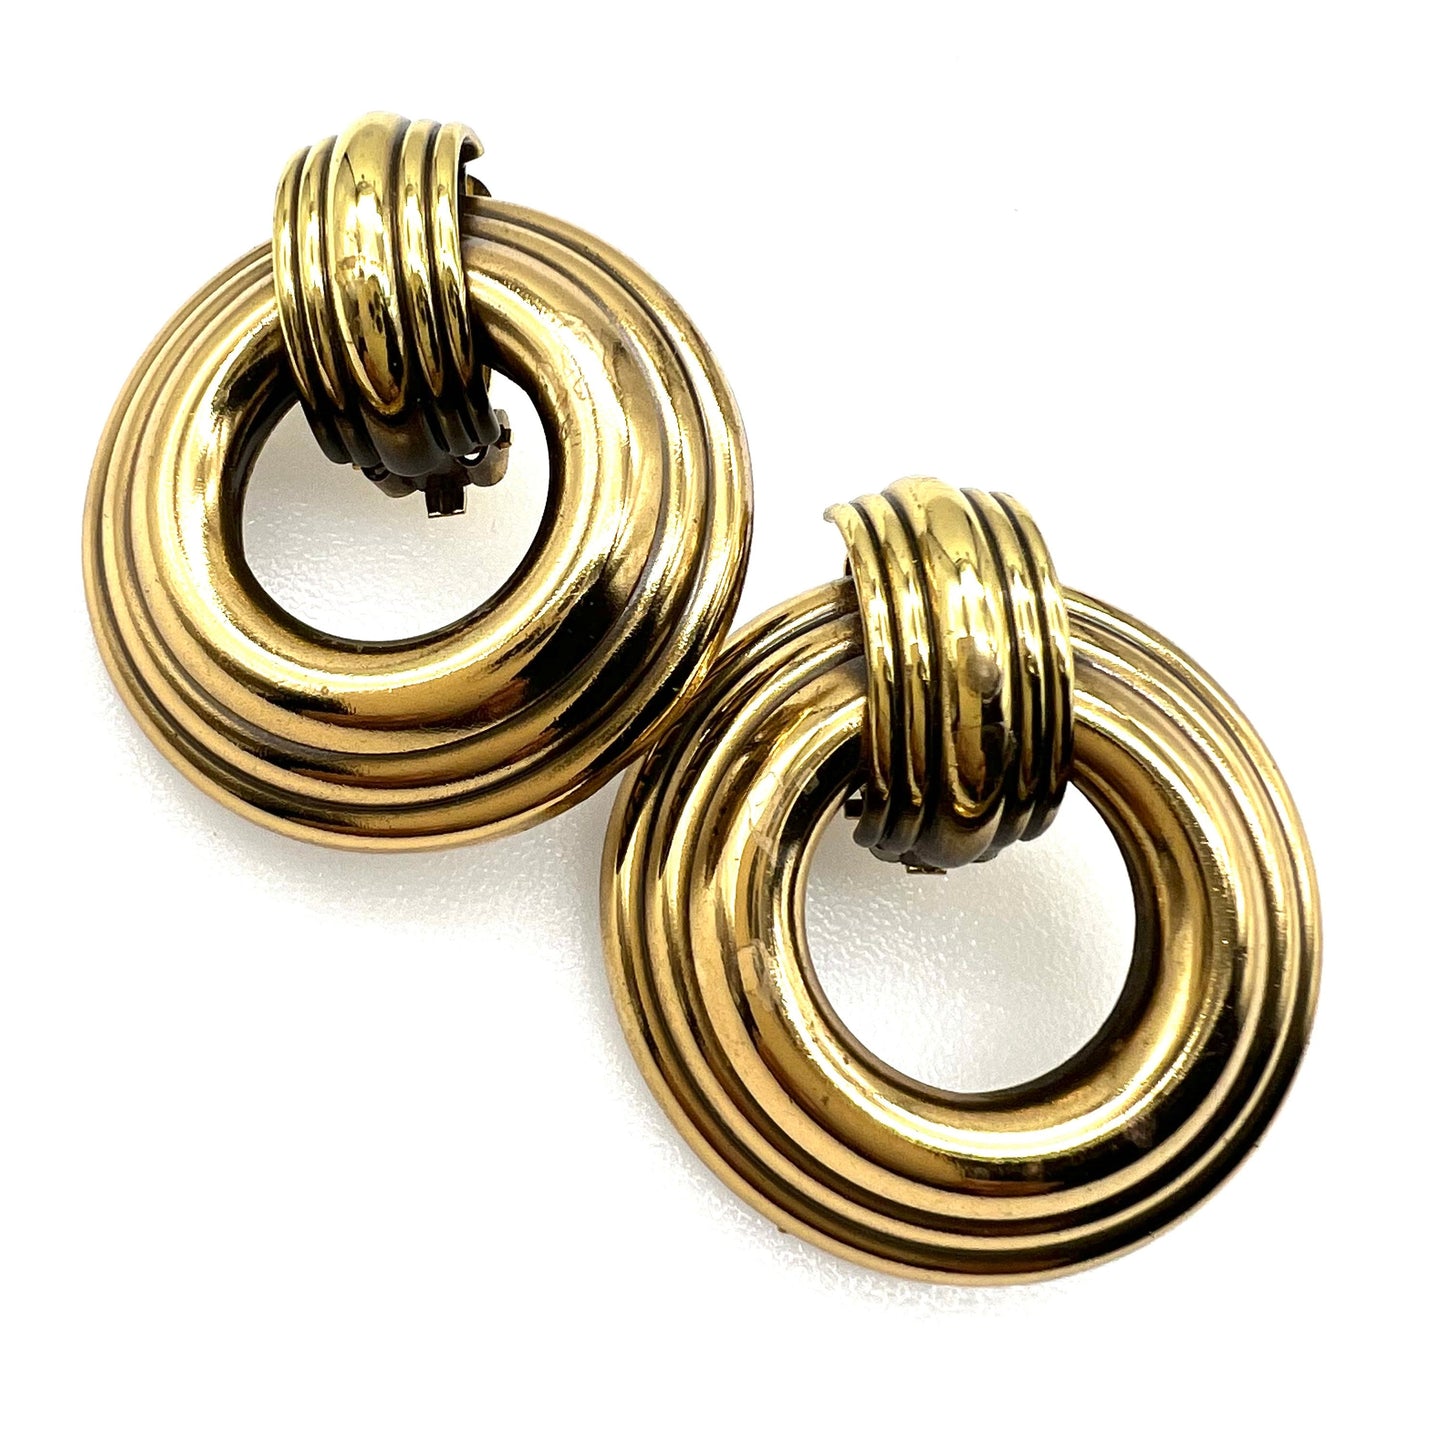 Ermani Bulatti Antiqued Gold Rigid Door Knocker Clip On Earrings